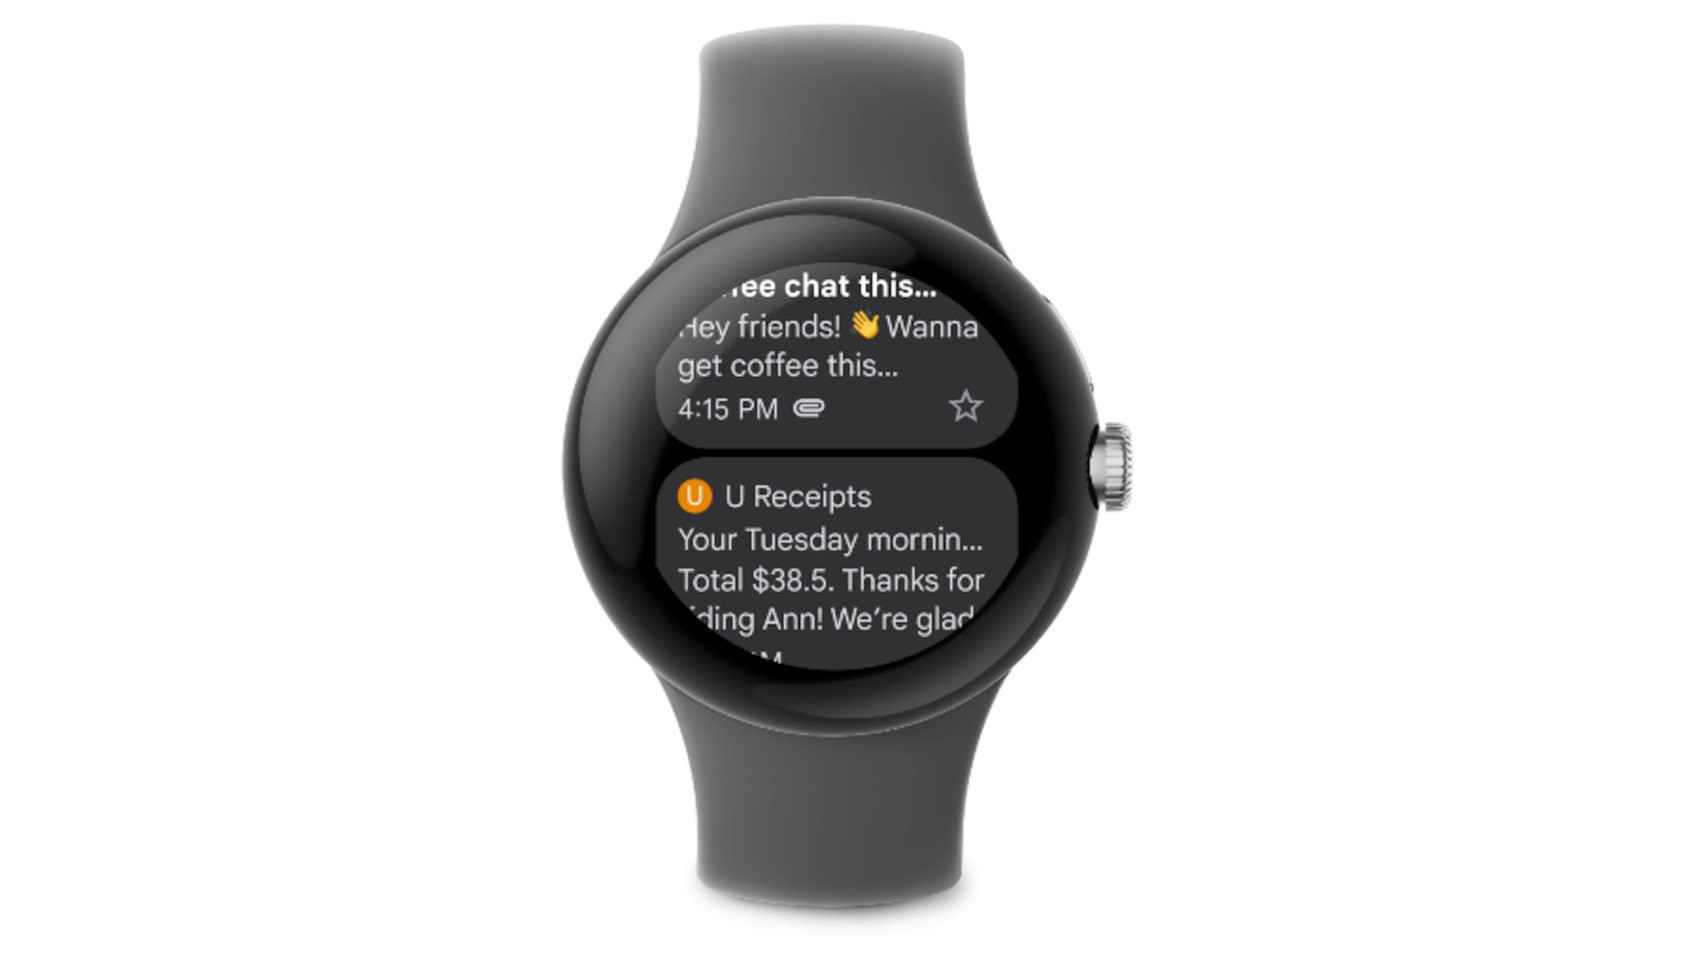 Nueva app de Gmail para relojes Wear OS